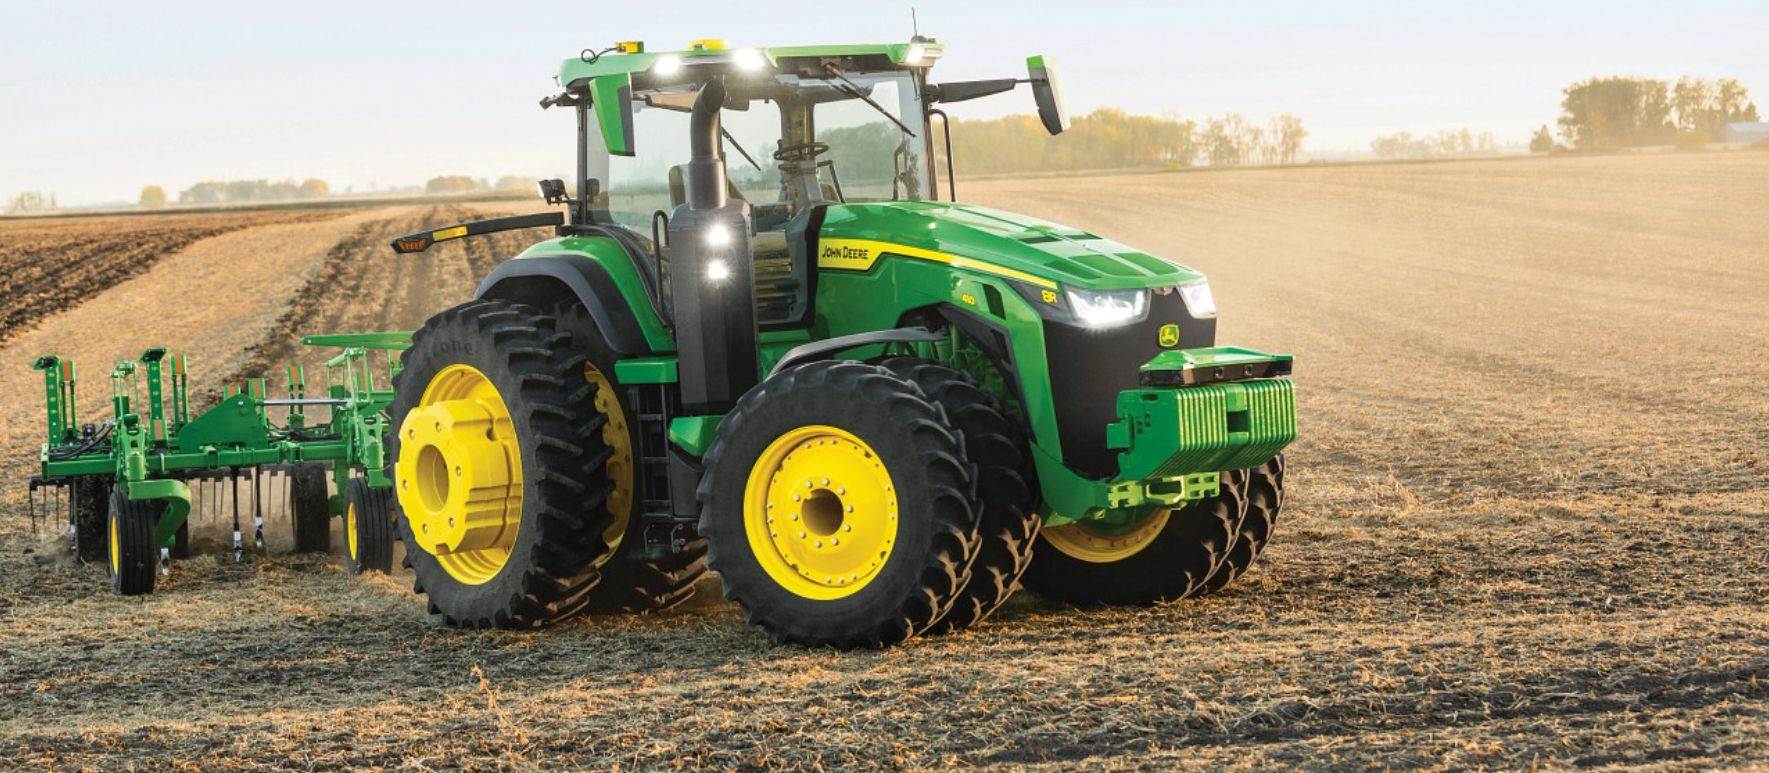  John Deere traktor (1).jpg 